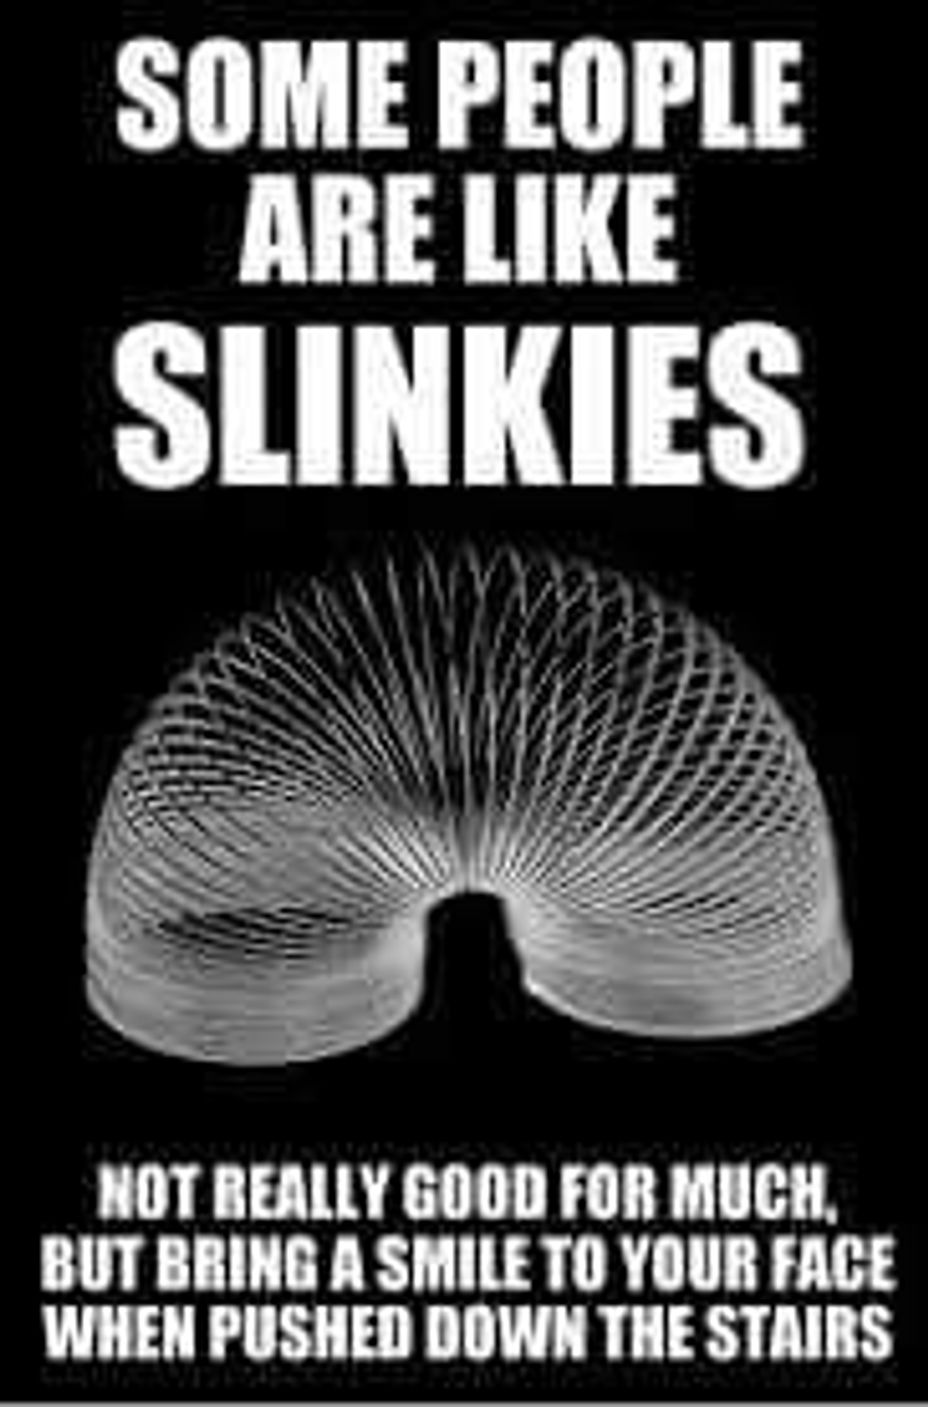 <p>Slinky do you remember Them <a class="tm-topic-link ugc-topic" title="Slinkies" href="/topic/slinkies/" data-id="5ea53b2259b9650103792704" data-name="Slinkies" aria-label="hashtag Slinkies">#Slinkies</a>  <a class="tm-topic-link ugc-topic" title="Giggles" href="/topic/giggles/" data-id="5cc062d34e72de00d9d35afd" data-name="Giggles" aria-label="hashtag Giggles">#Giggles</a> <a class="tm-topic-link ugc-topic" title="laughterisgoodmedicine" href="/topic/laughterisgoodmedicine/" data-id="5e51a82791846900e03b862f" data-name="laughterisgoodmedicine" aria-label="hashtag laughterisgoodmedicine">#laughterisgoodmedicine</a></p>